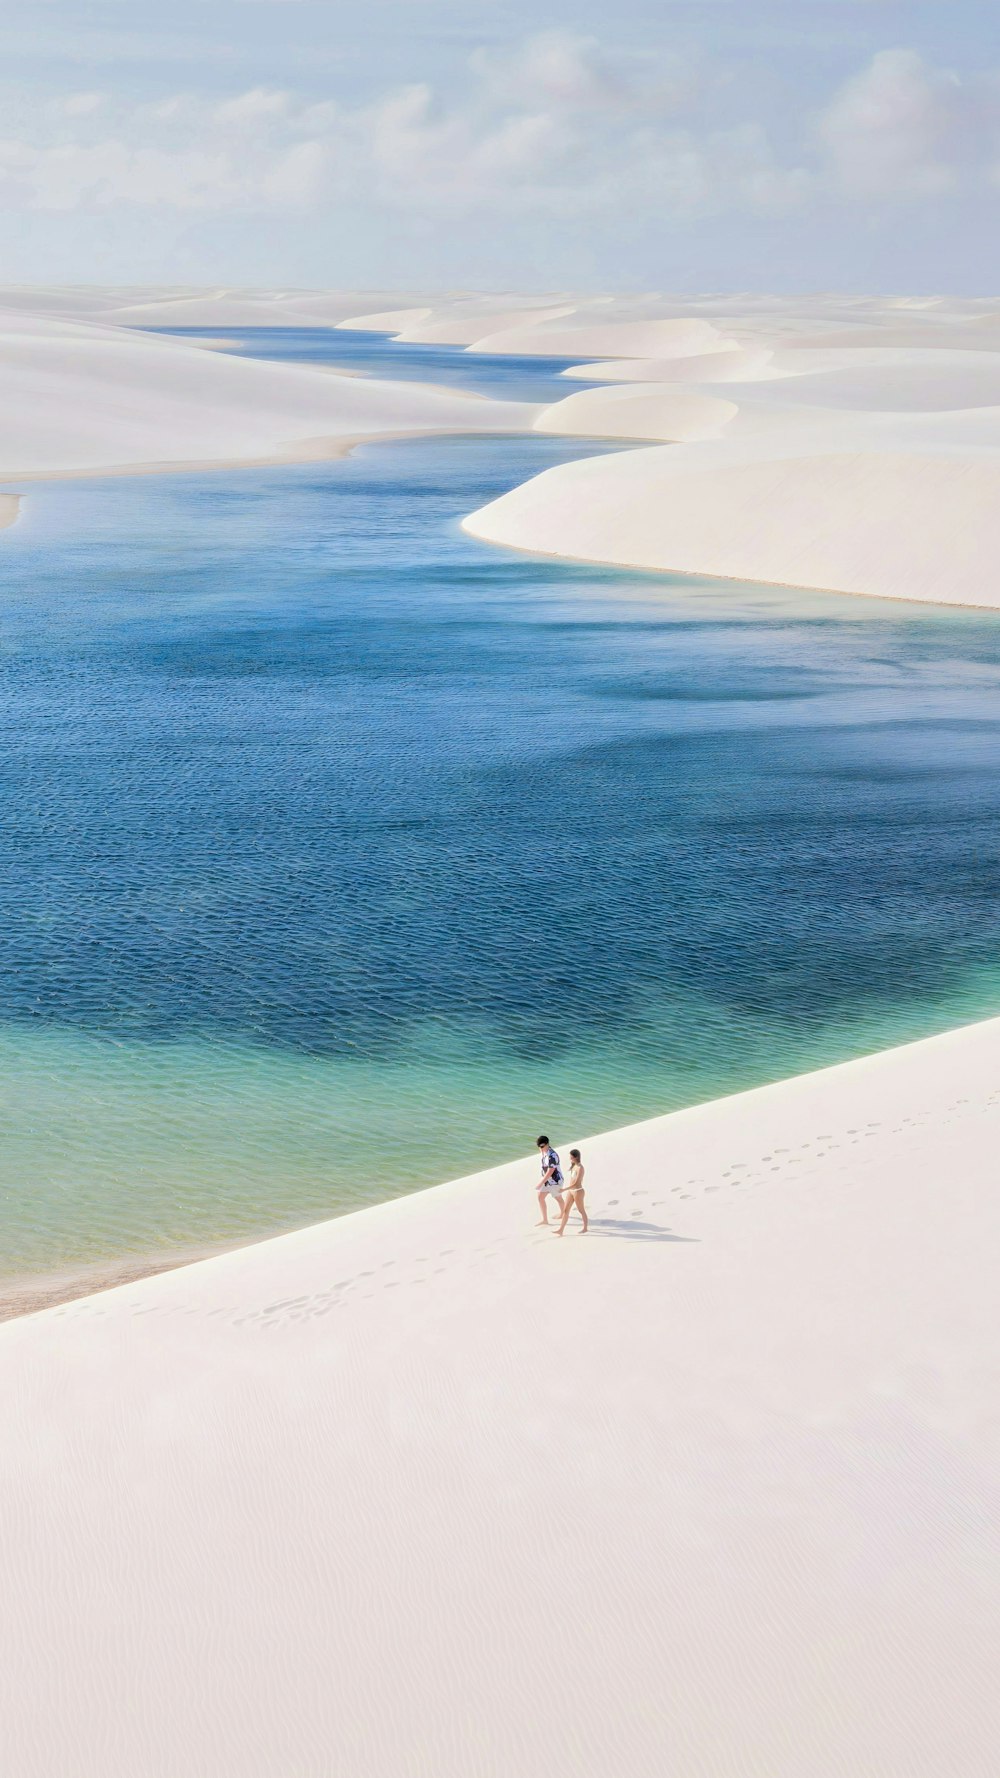 a couple of people walking across a sandy beach